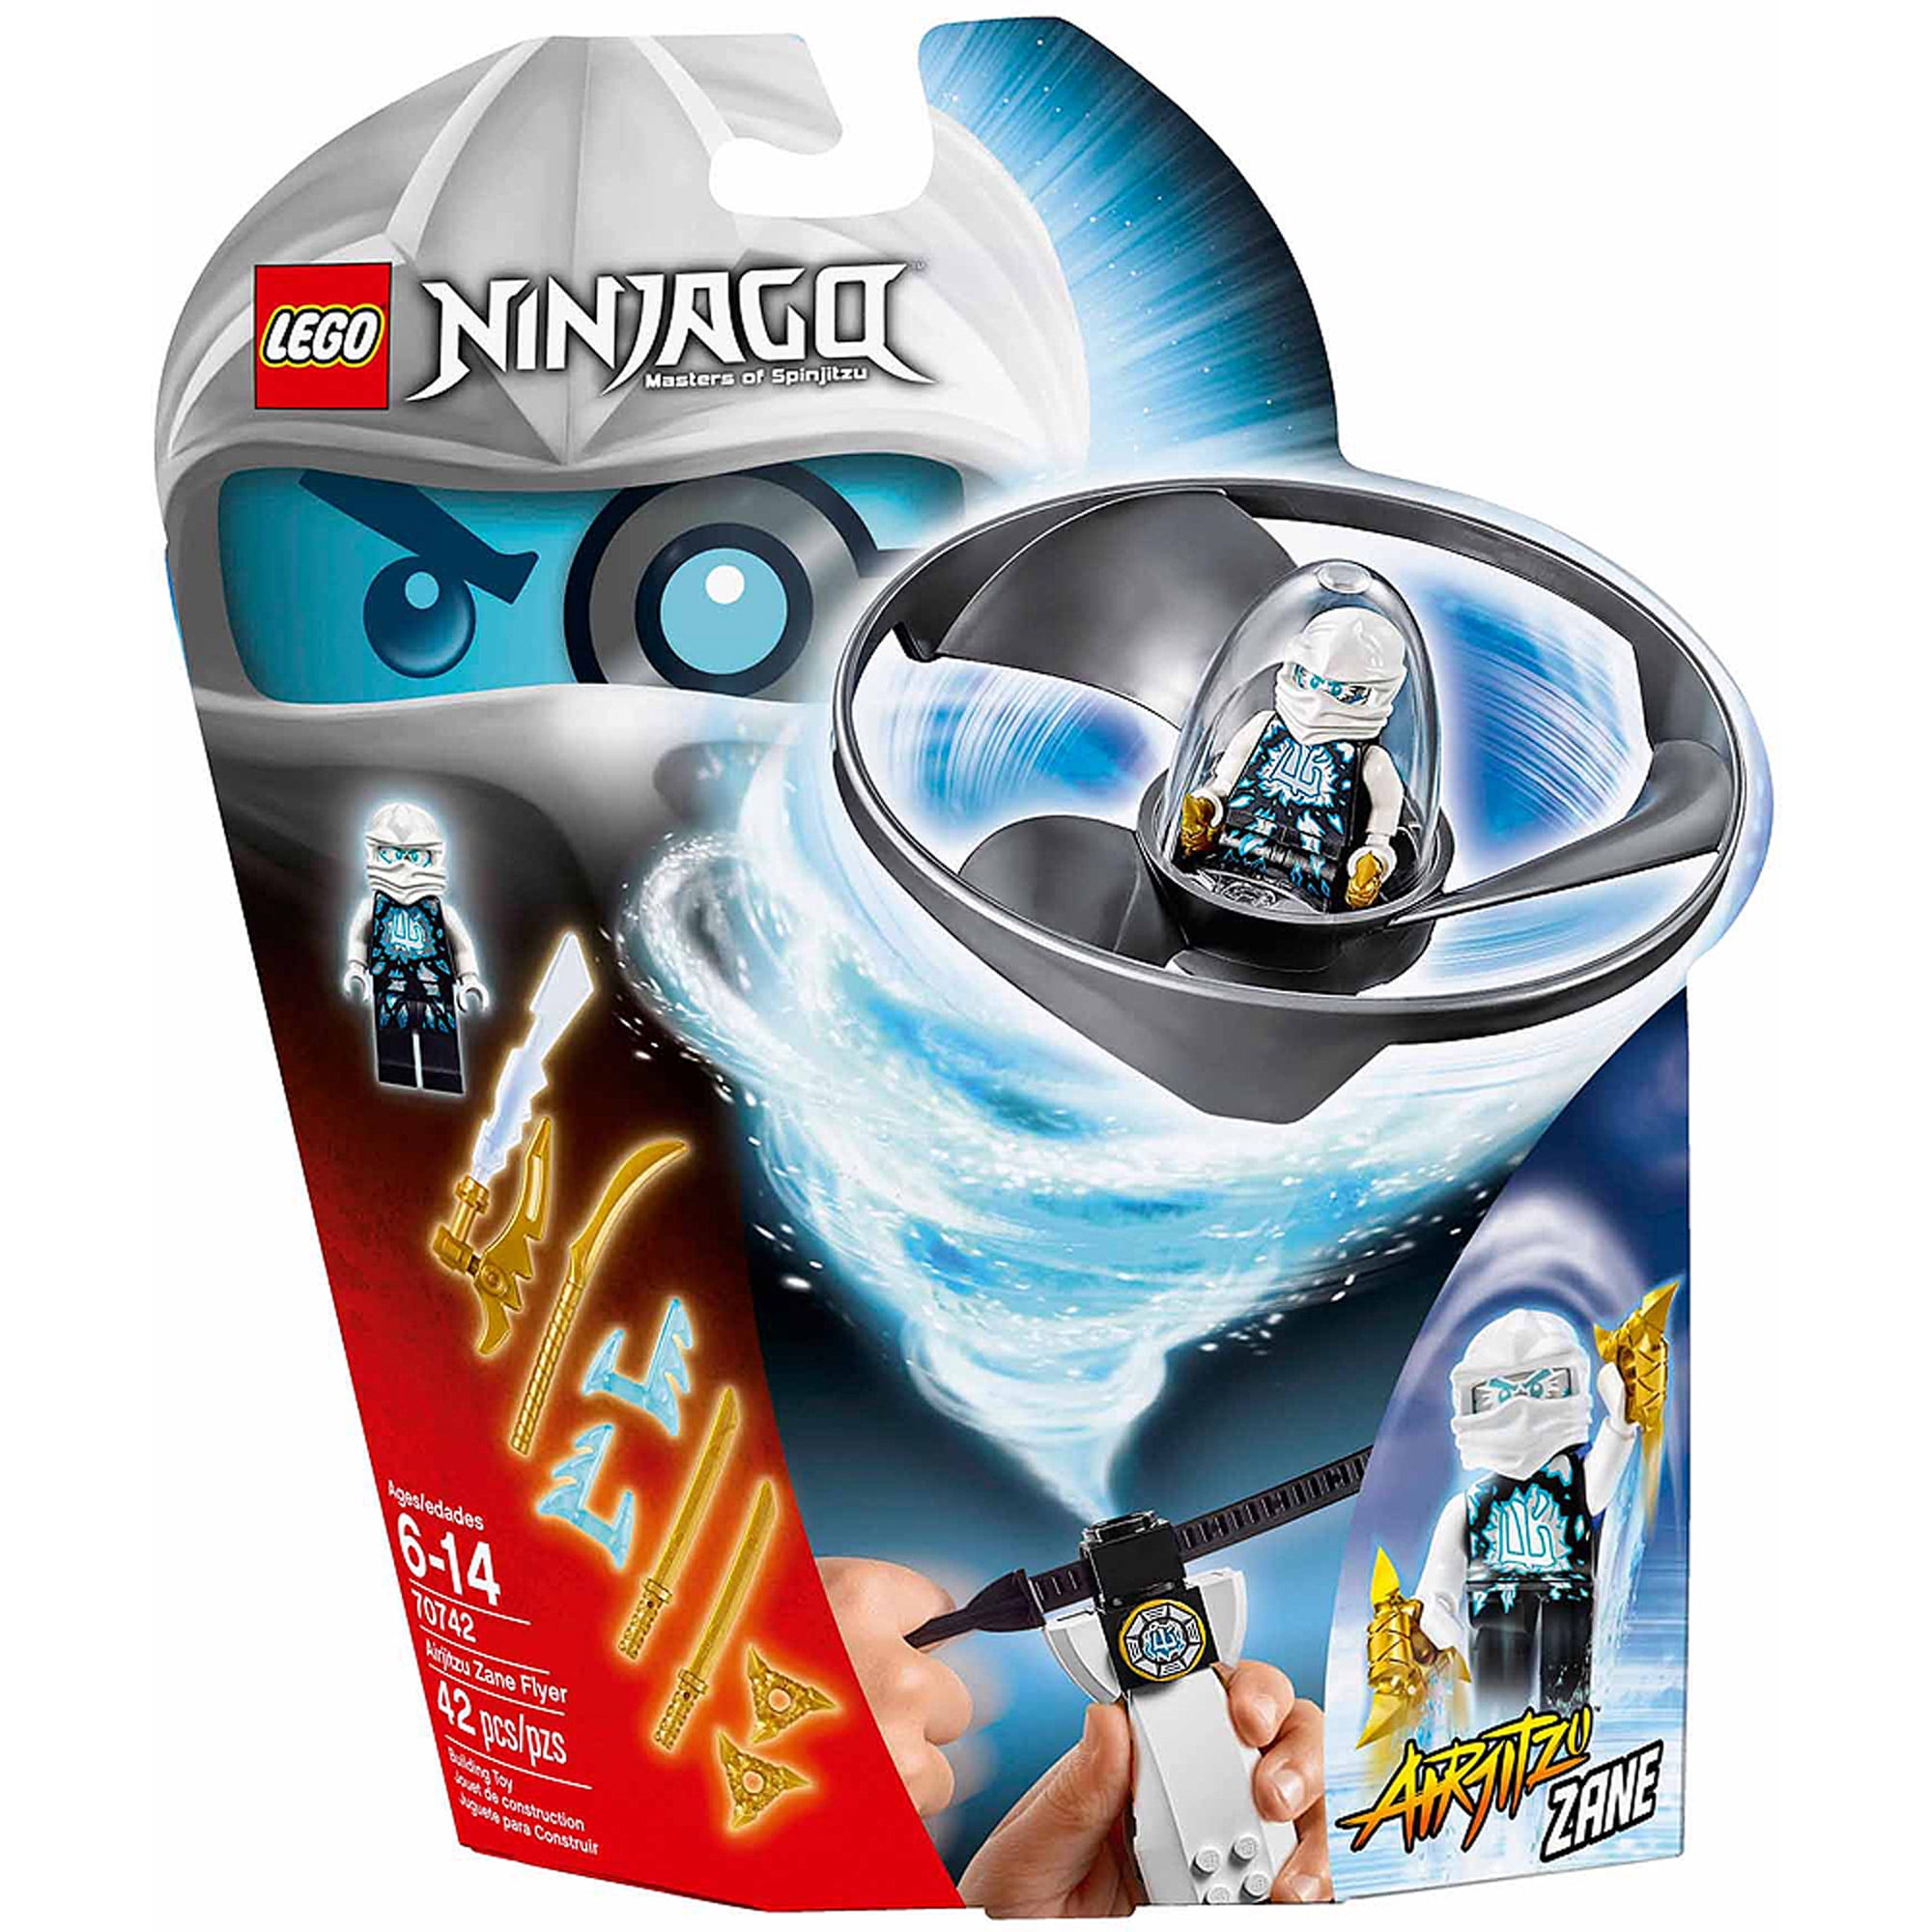 LEGO Ninjago Airjitzu Zane Flyer - Walmart.com - Walmart.com